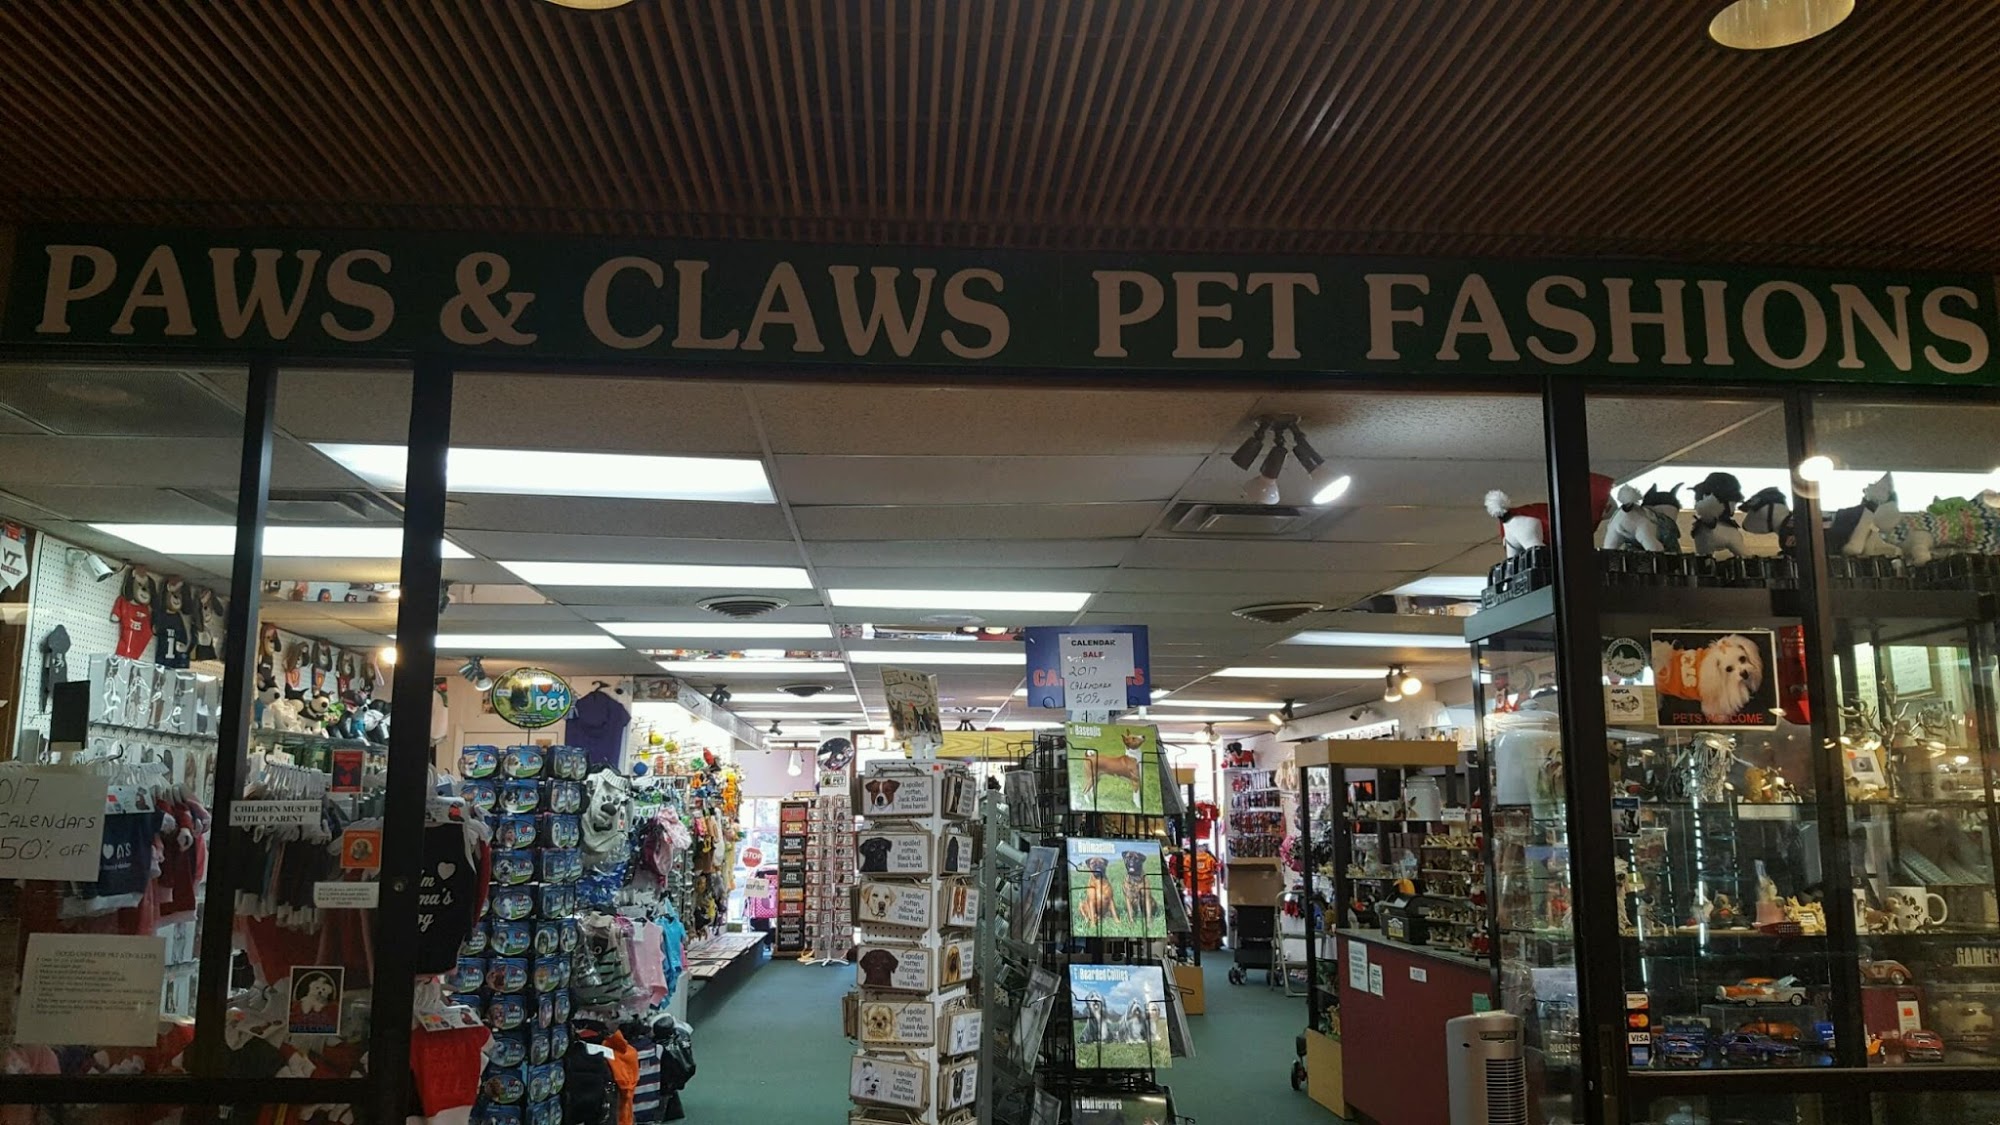 Paws & Claws Pet Fashion